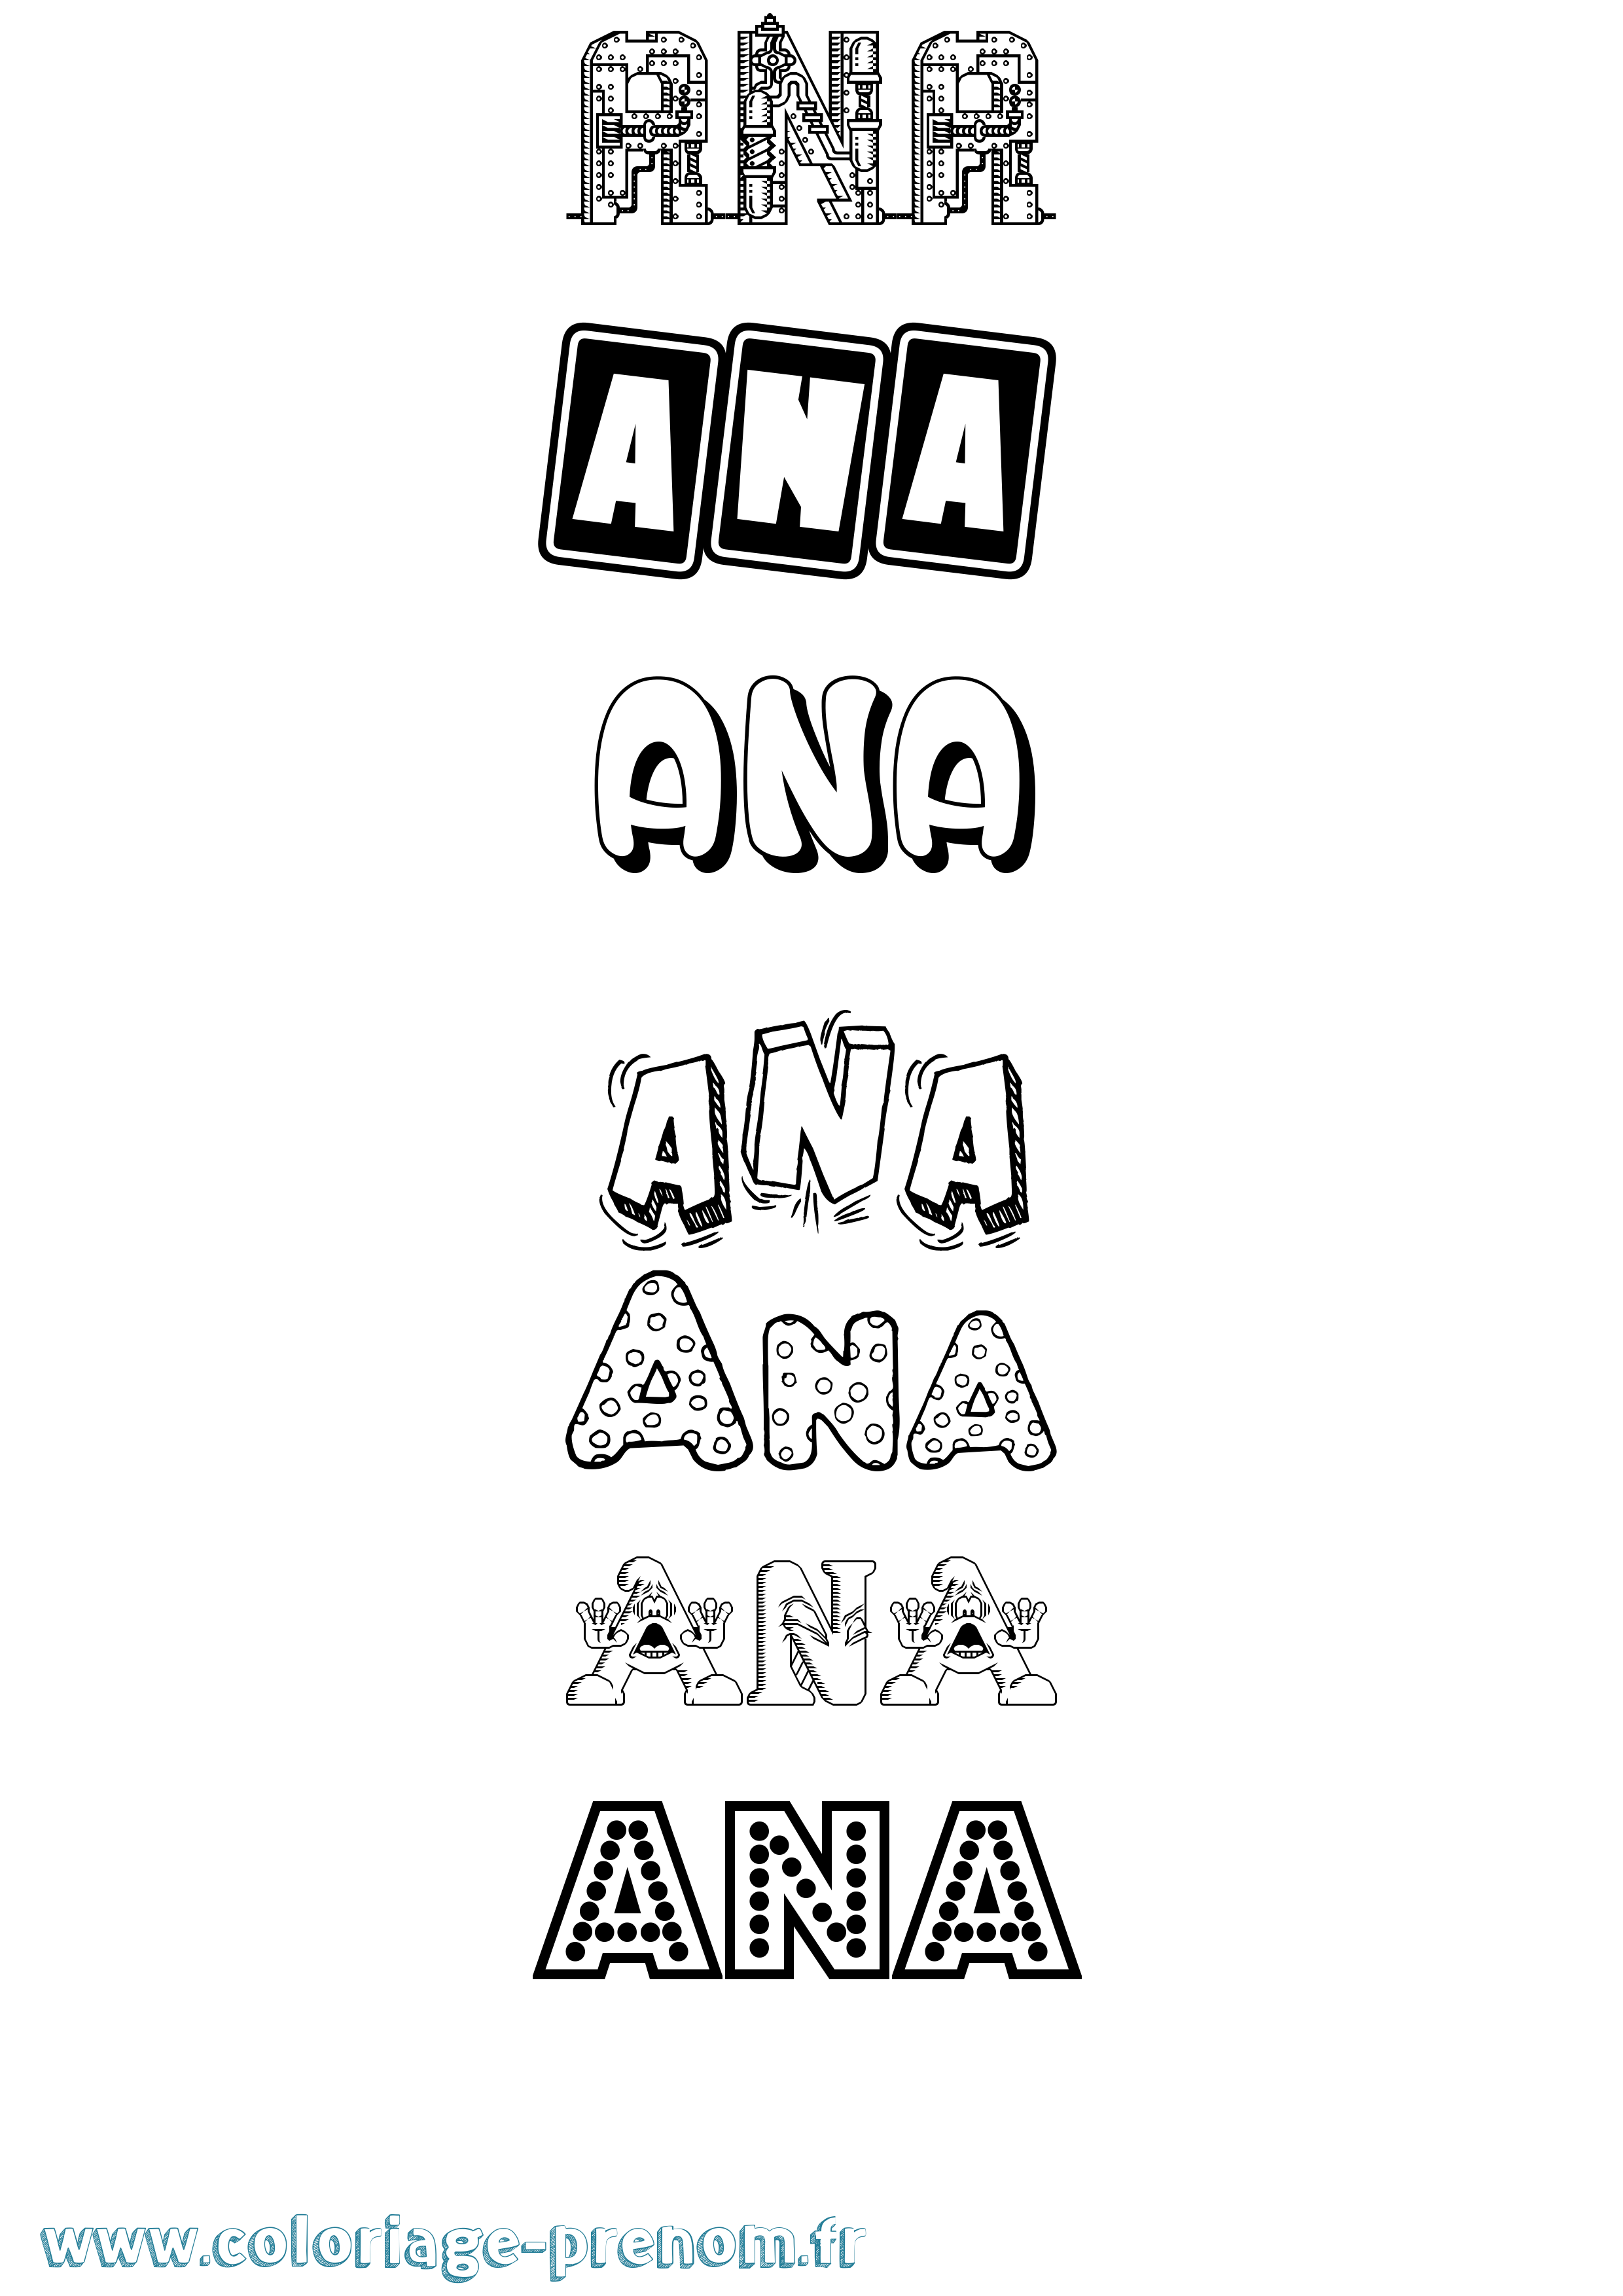 Coloriage prénom Ana Fun